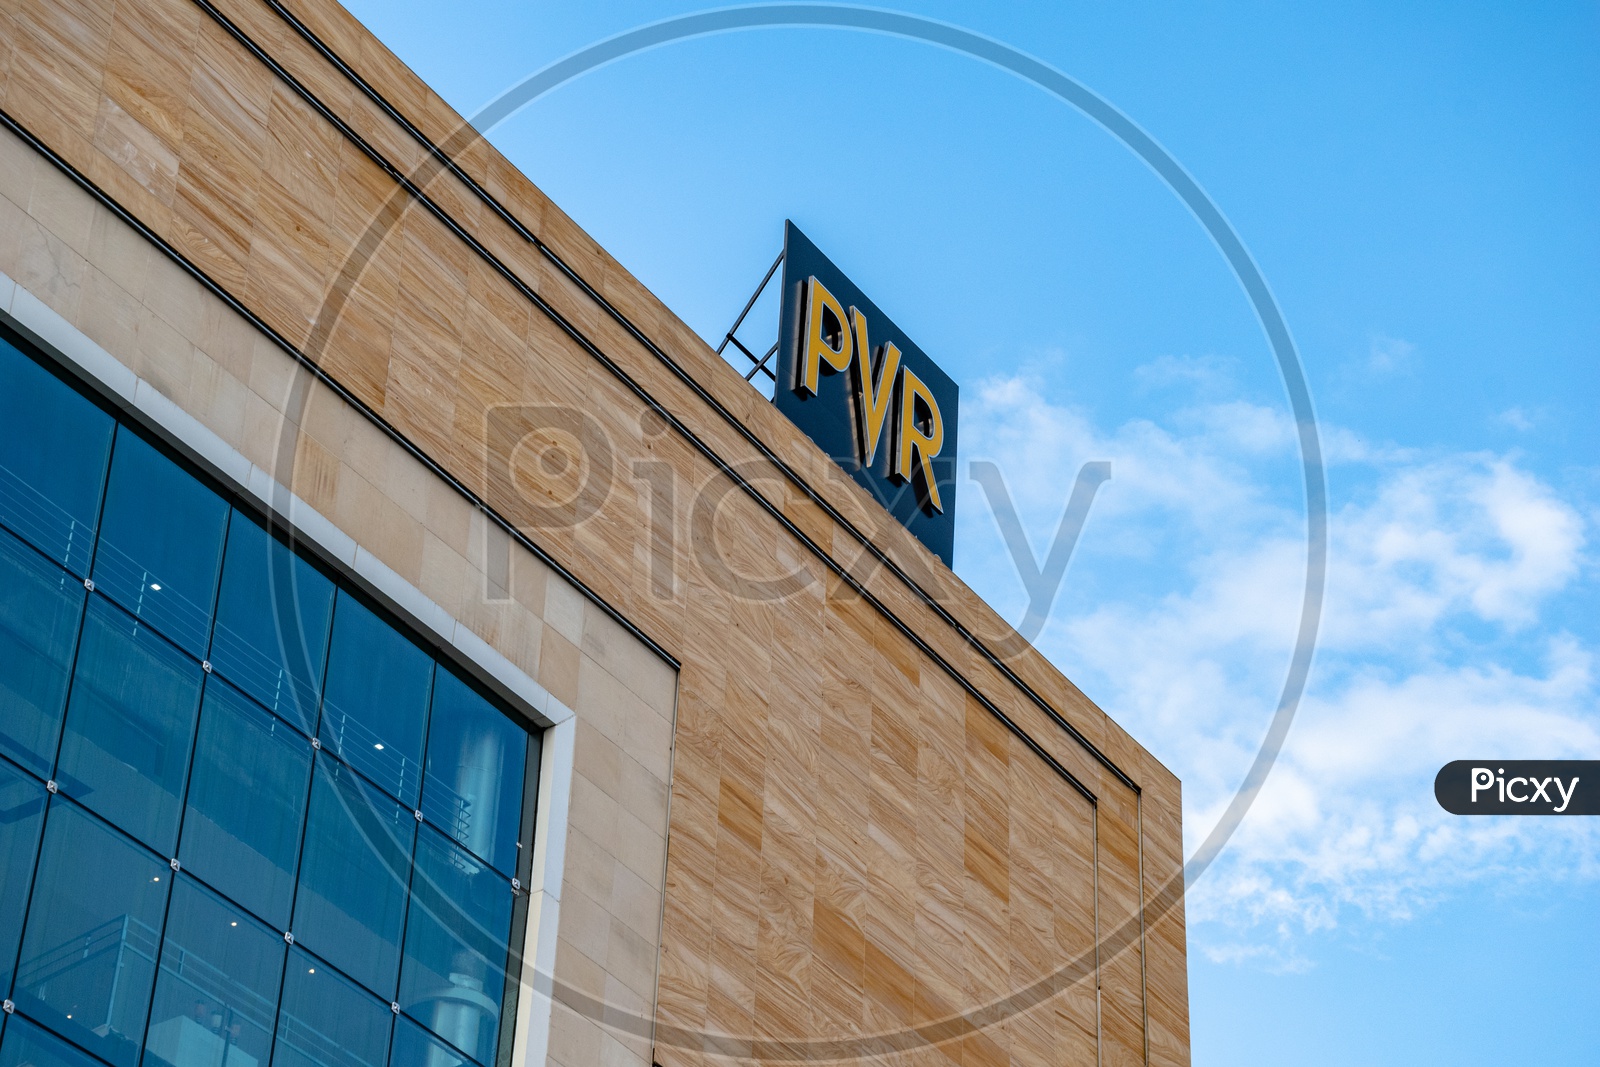 PVR cinemas at Preston Prime mall & multiplex, Gachibowli, Hyderabad.